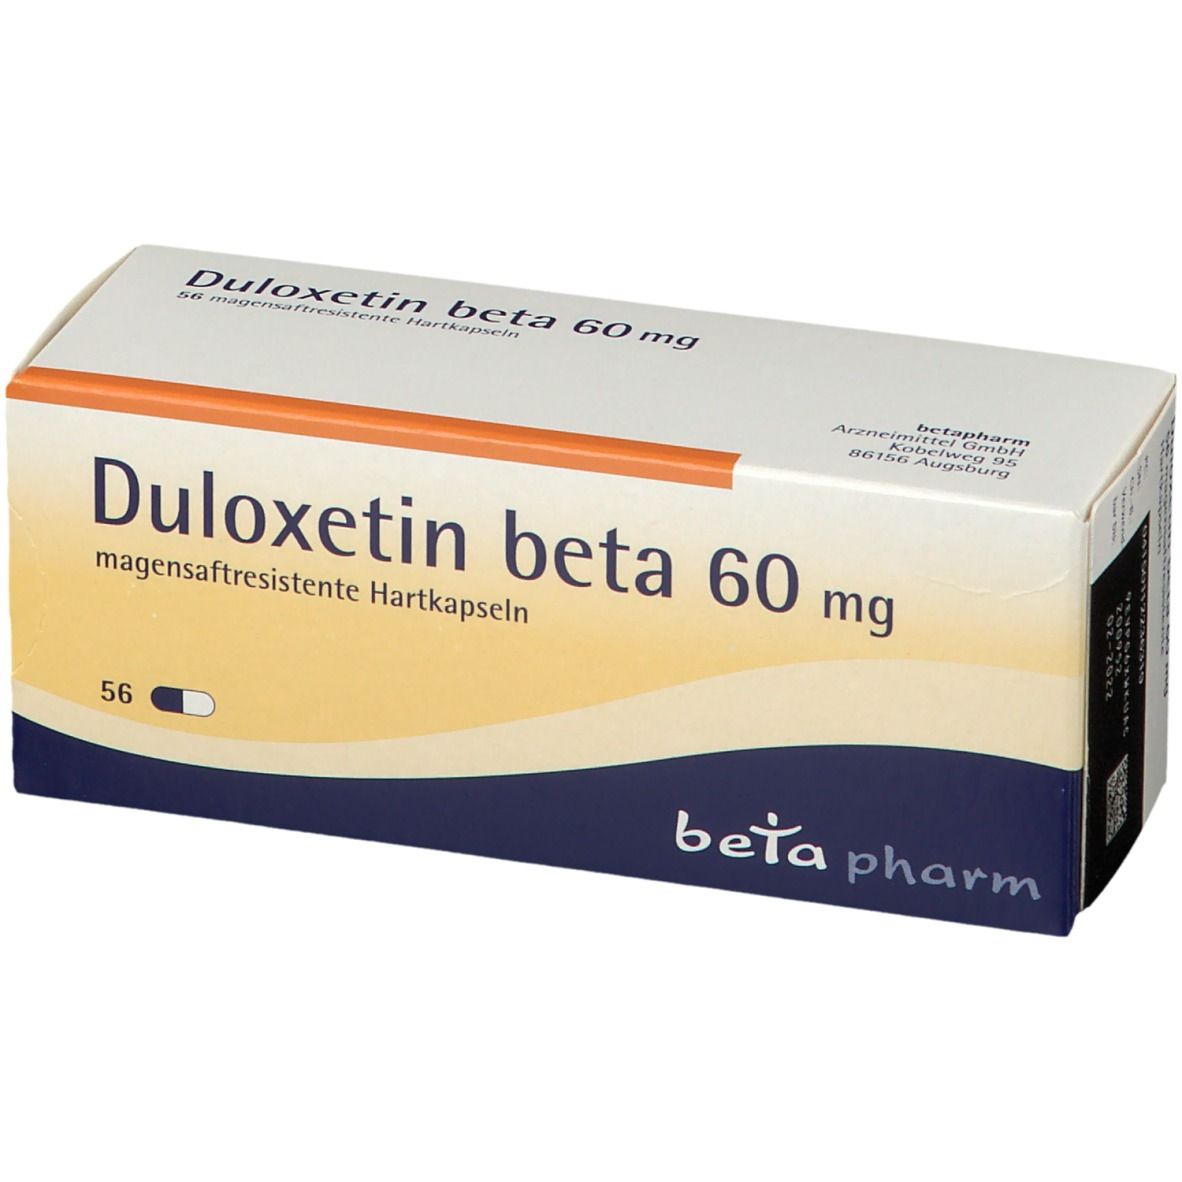 Duloxetin beta 60 mg